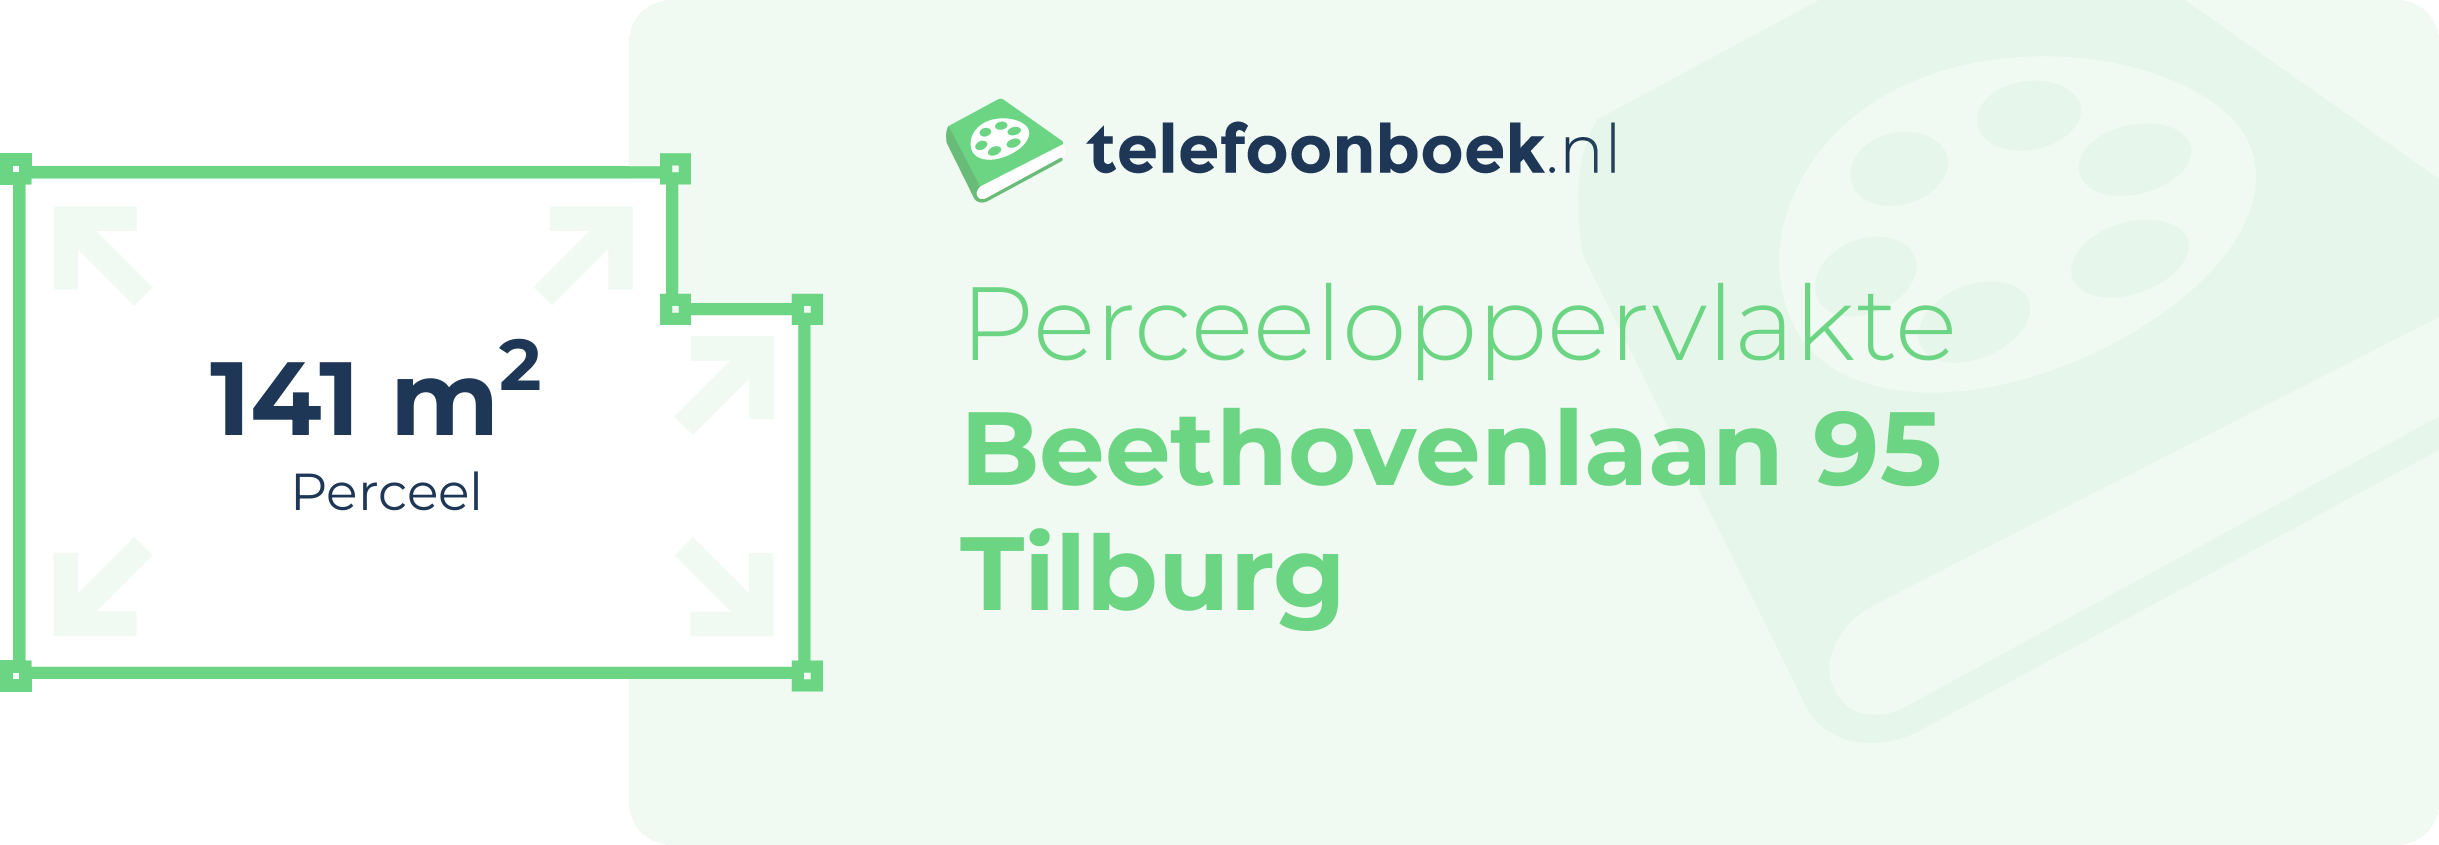 Perceeloppervlakte Beethovenlaan 95 Tilburg